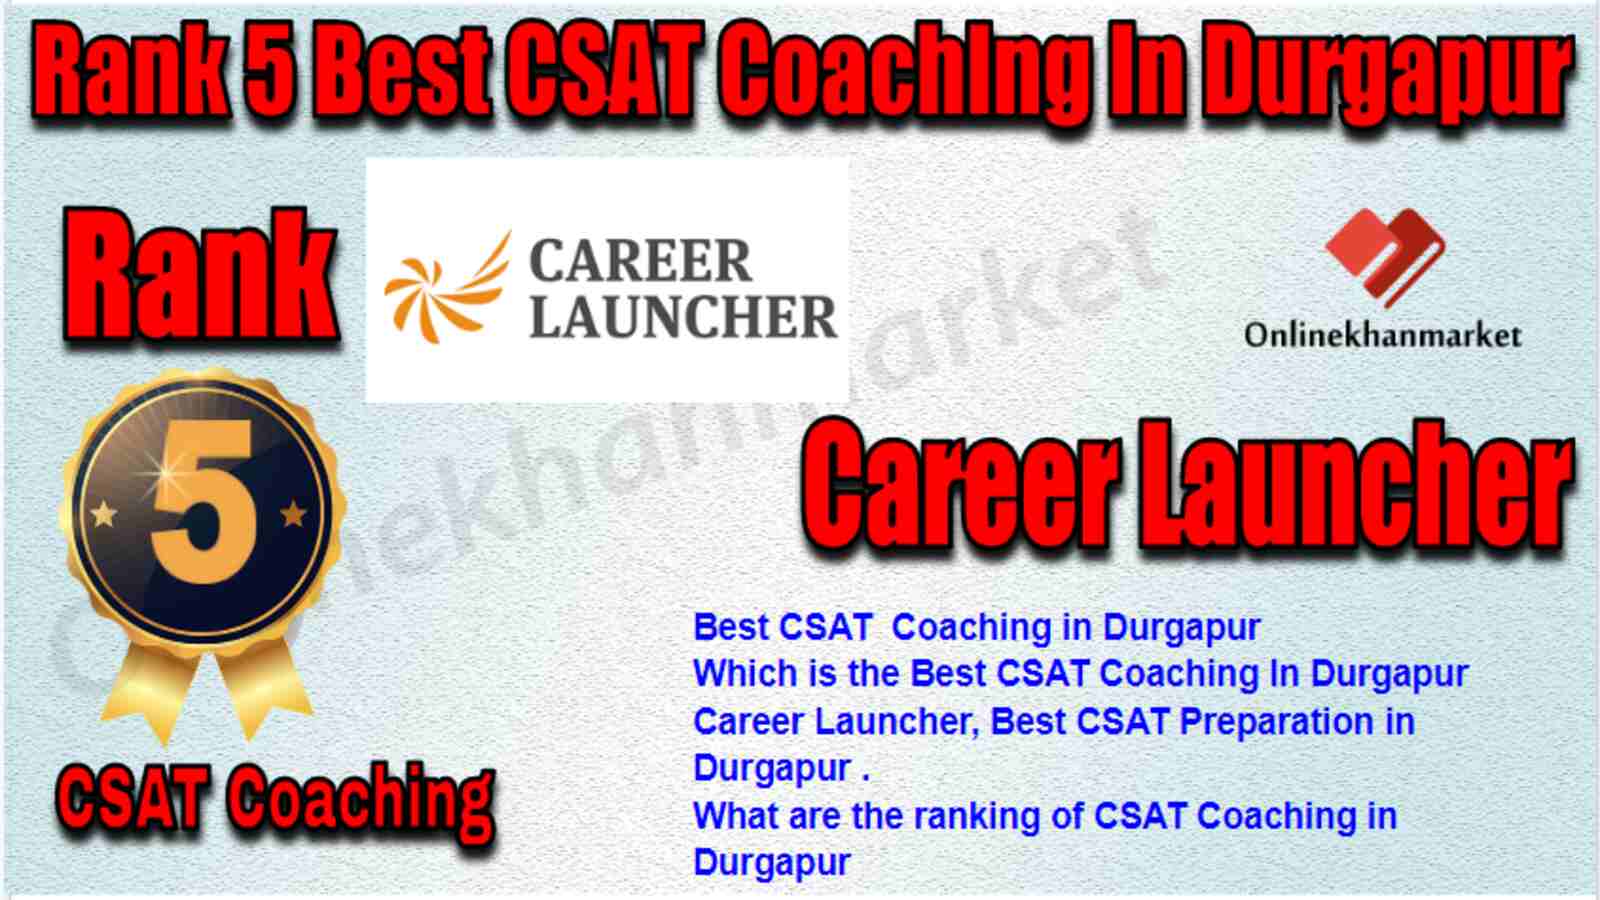 Rank 5 Best CSAT Coaching in Durgapur